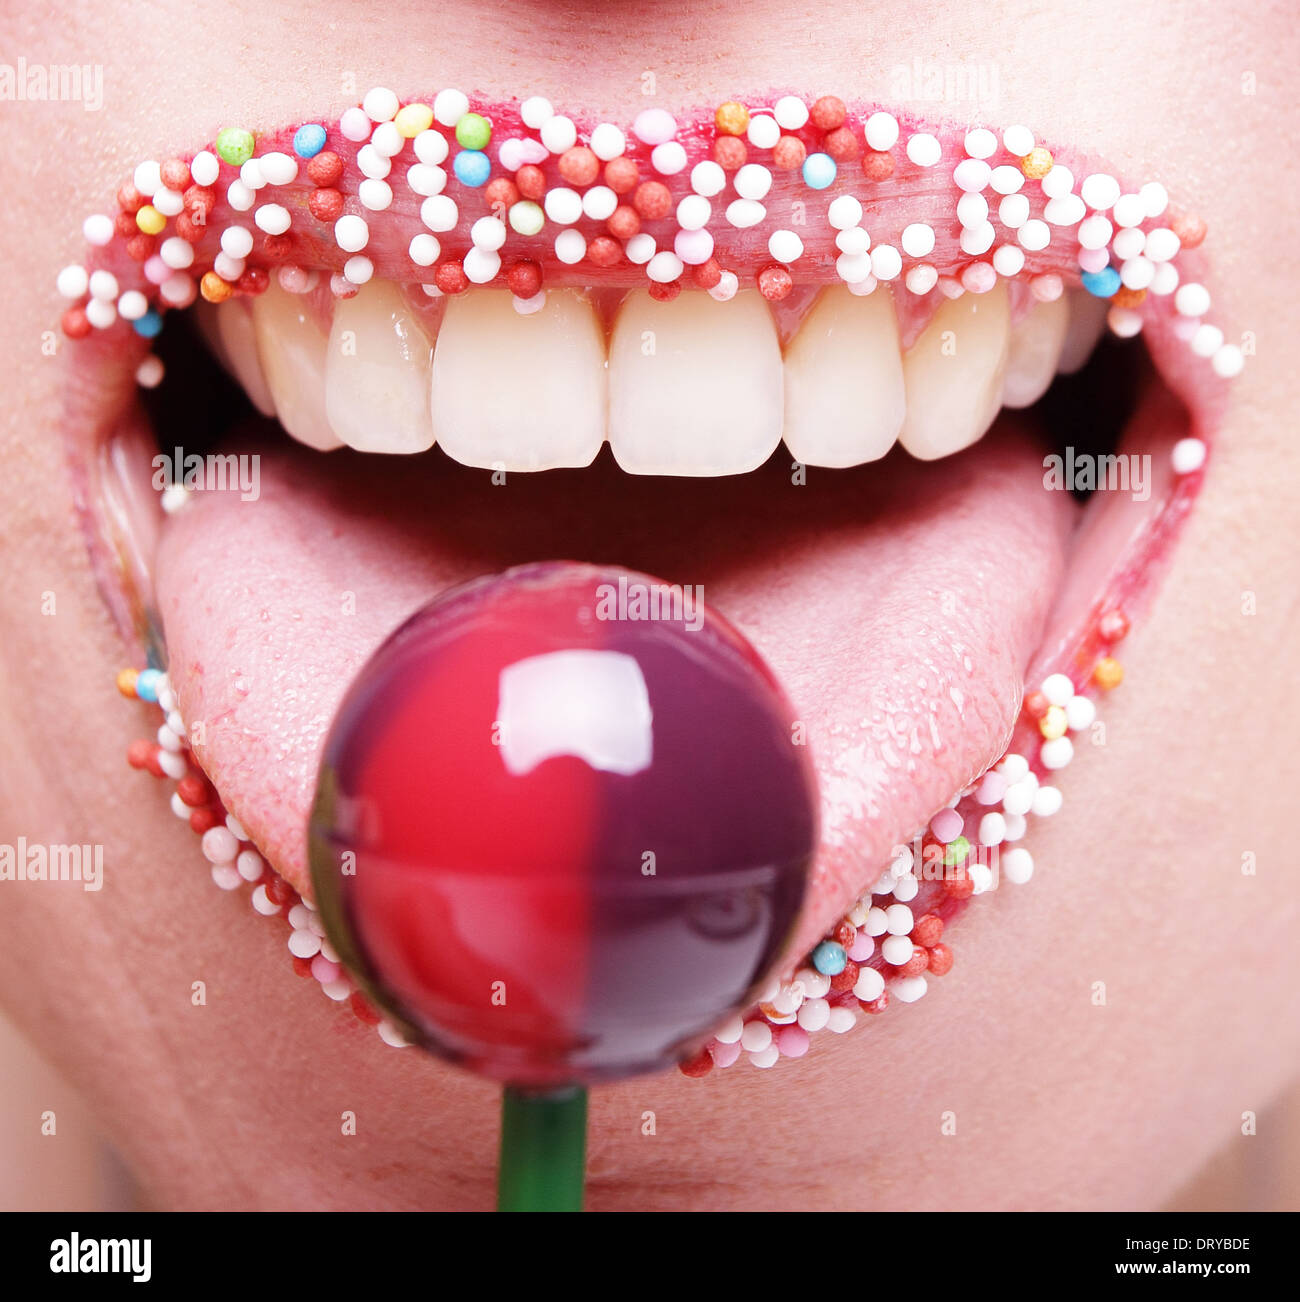 Sugar mouth Stock Photo